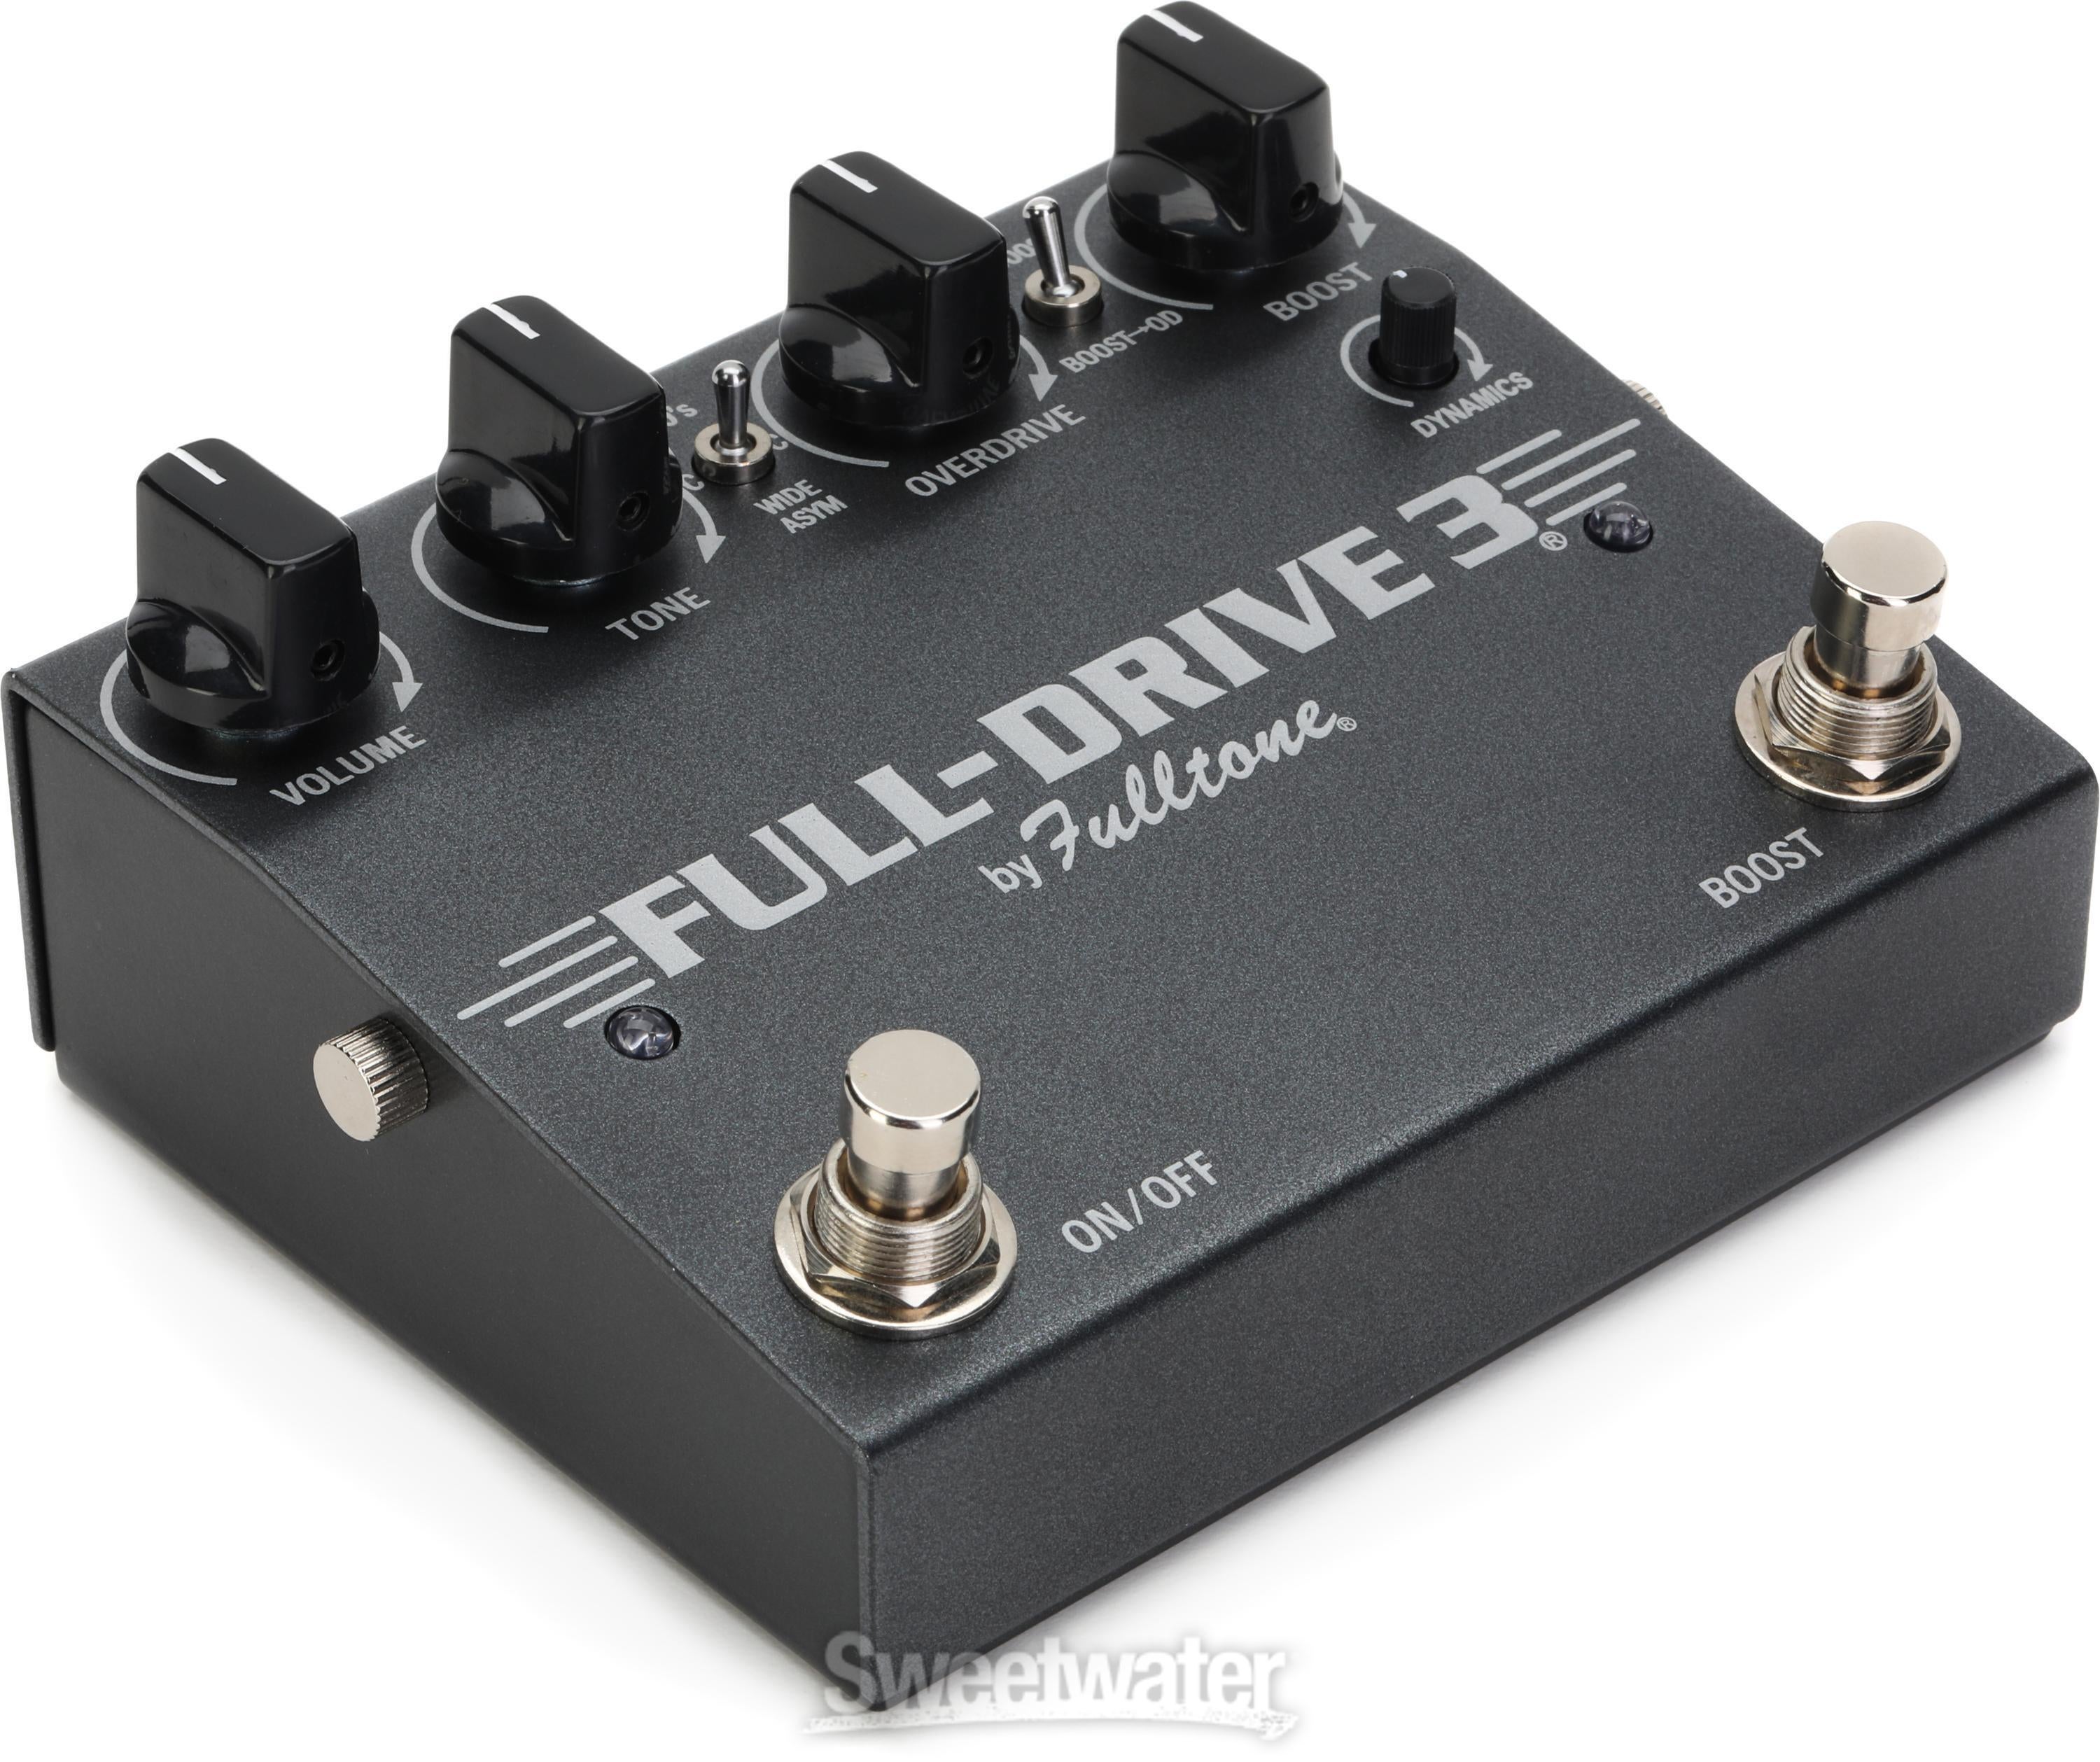 Fulltone Fulldrive 3 Overdrive / Boost Pedal